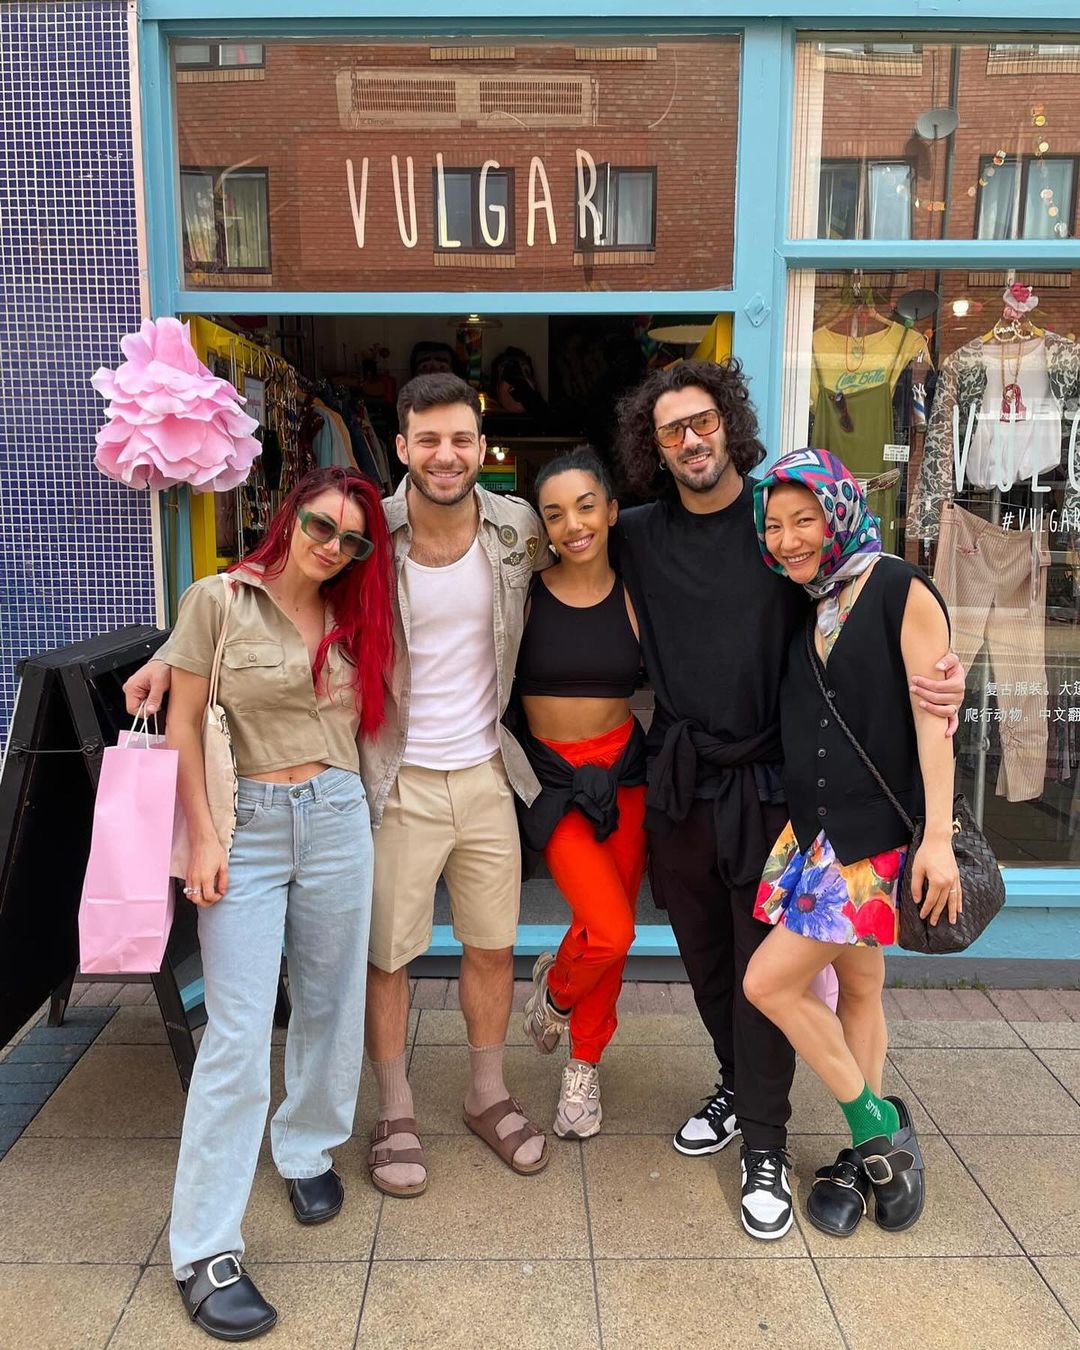 Vulgar Sheffield: Strictly Come Dancing stars visit popular vintage shop in city centre